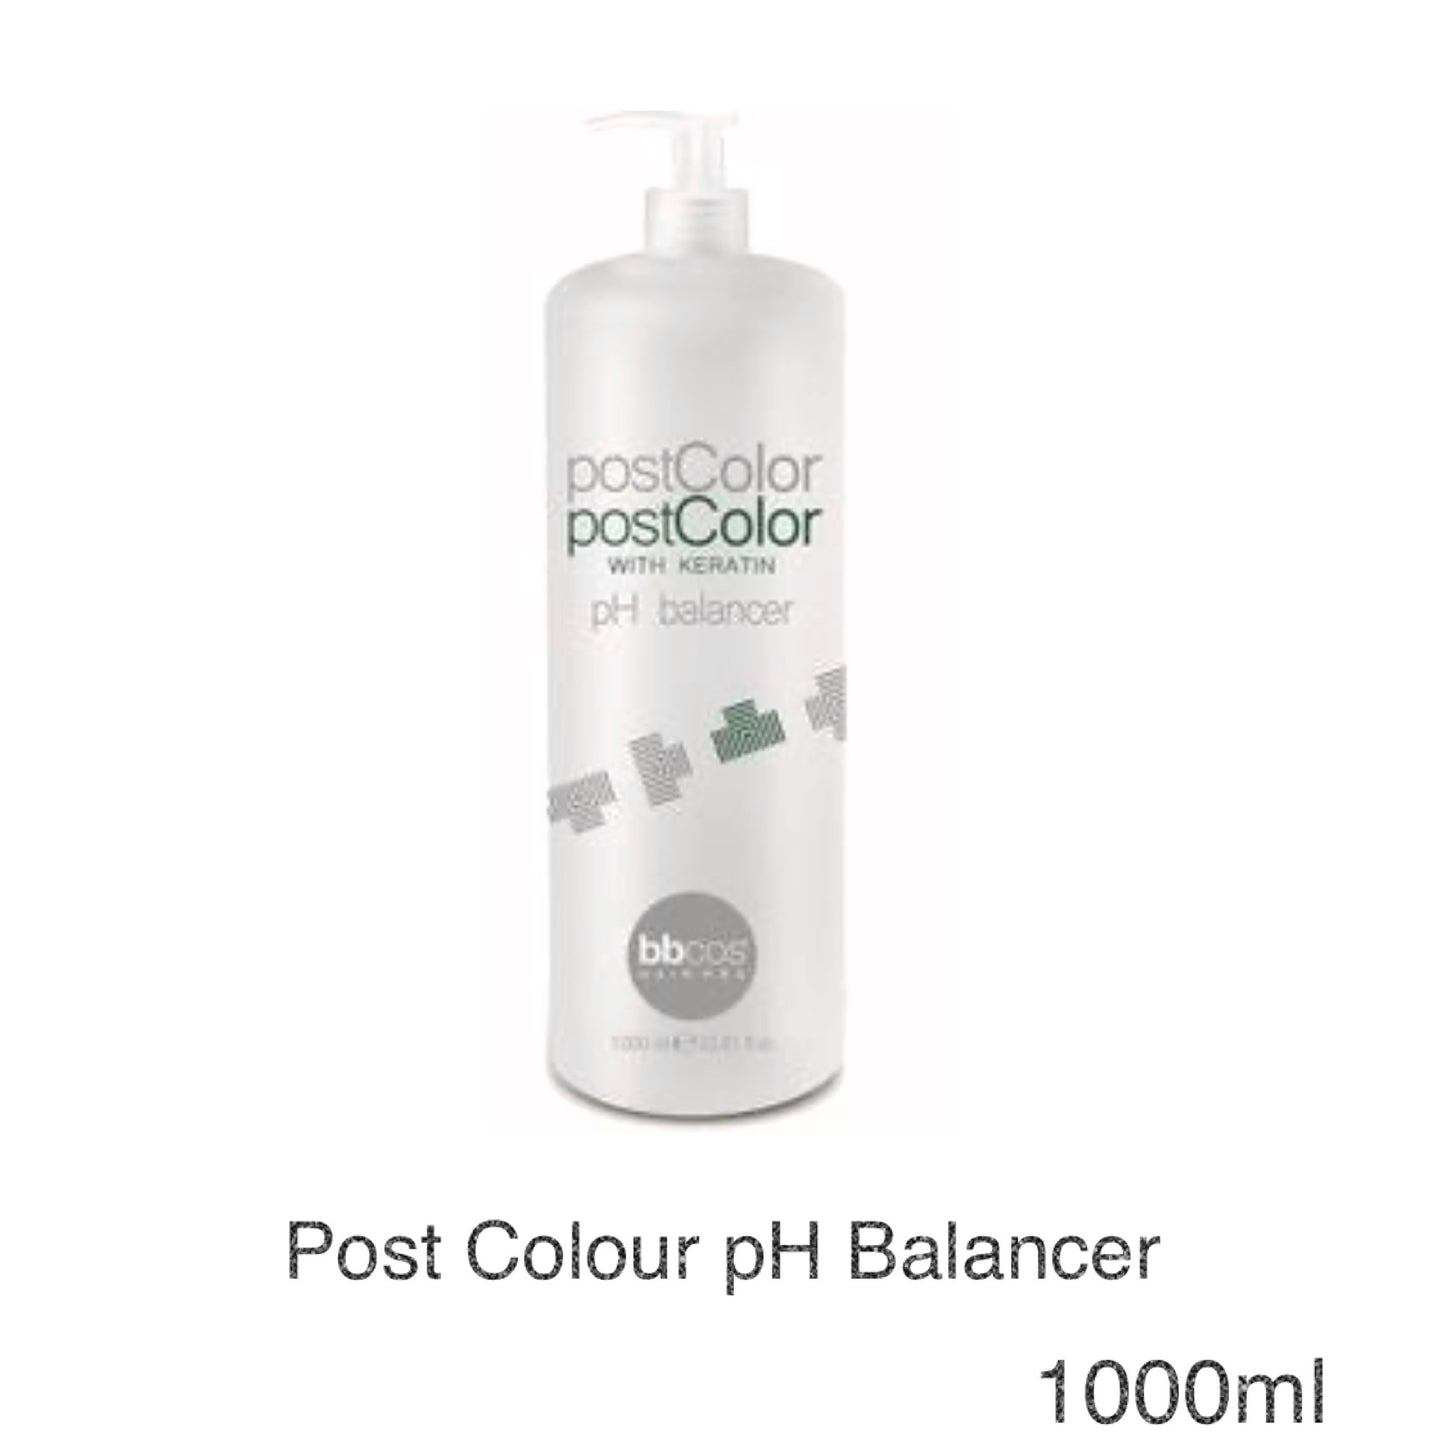 MHP- Italian Post Colour Shampoo & pH Balancer